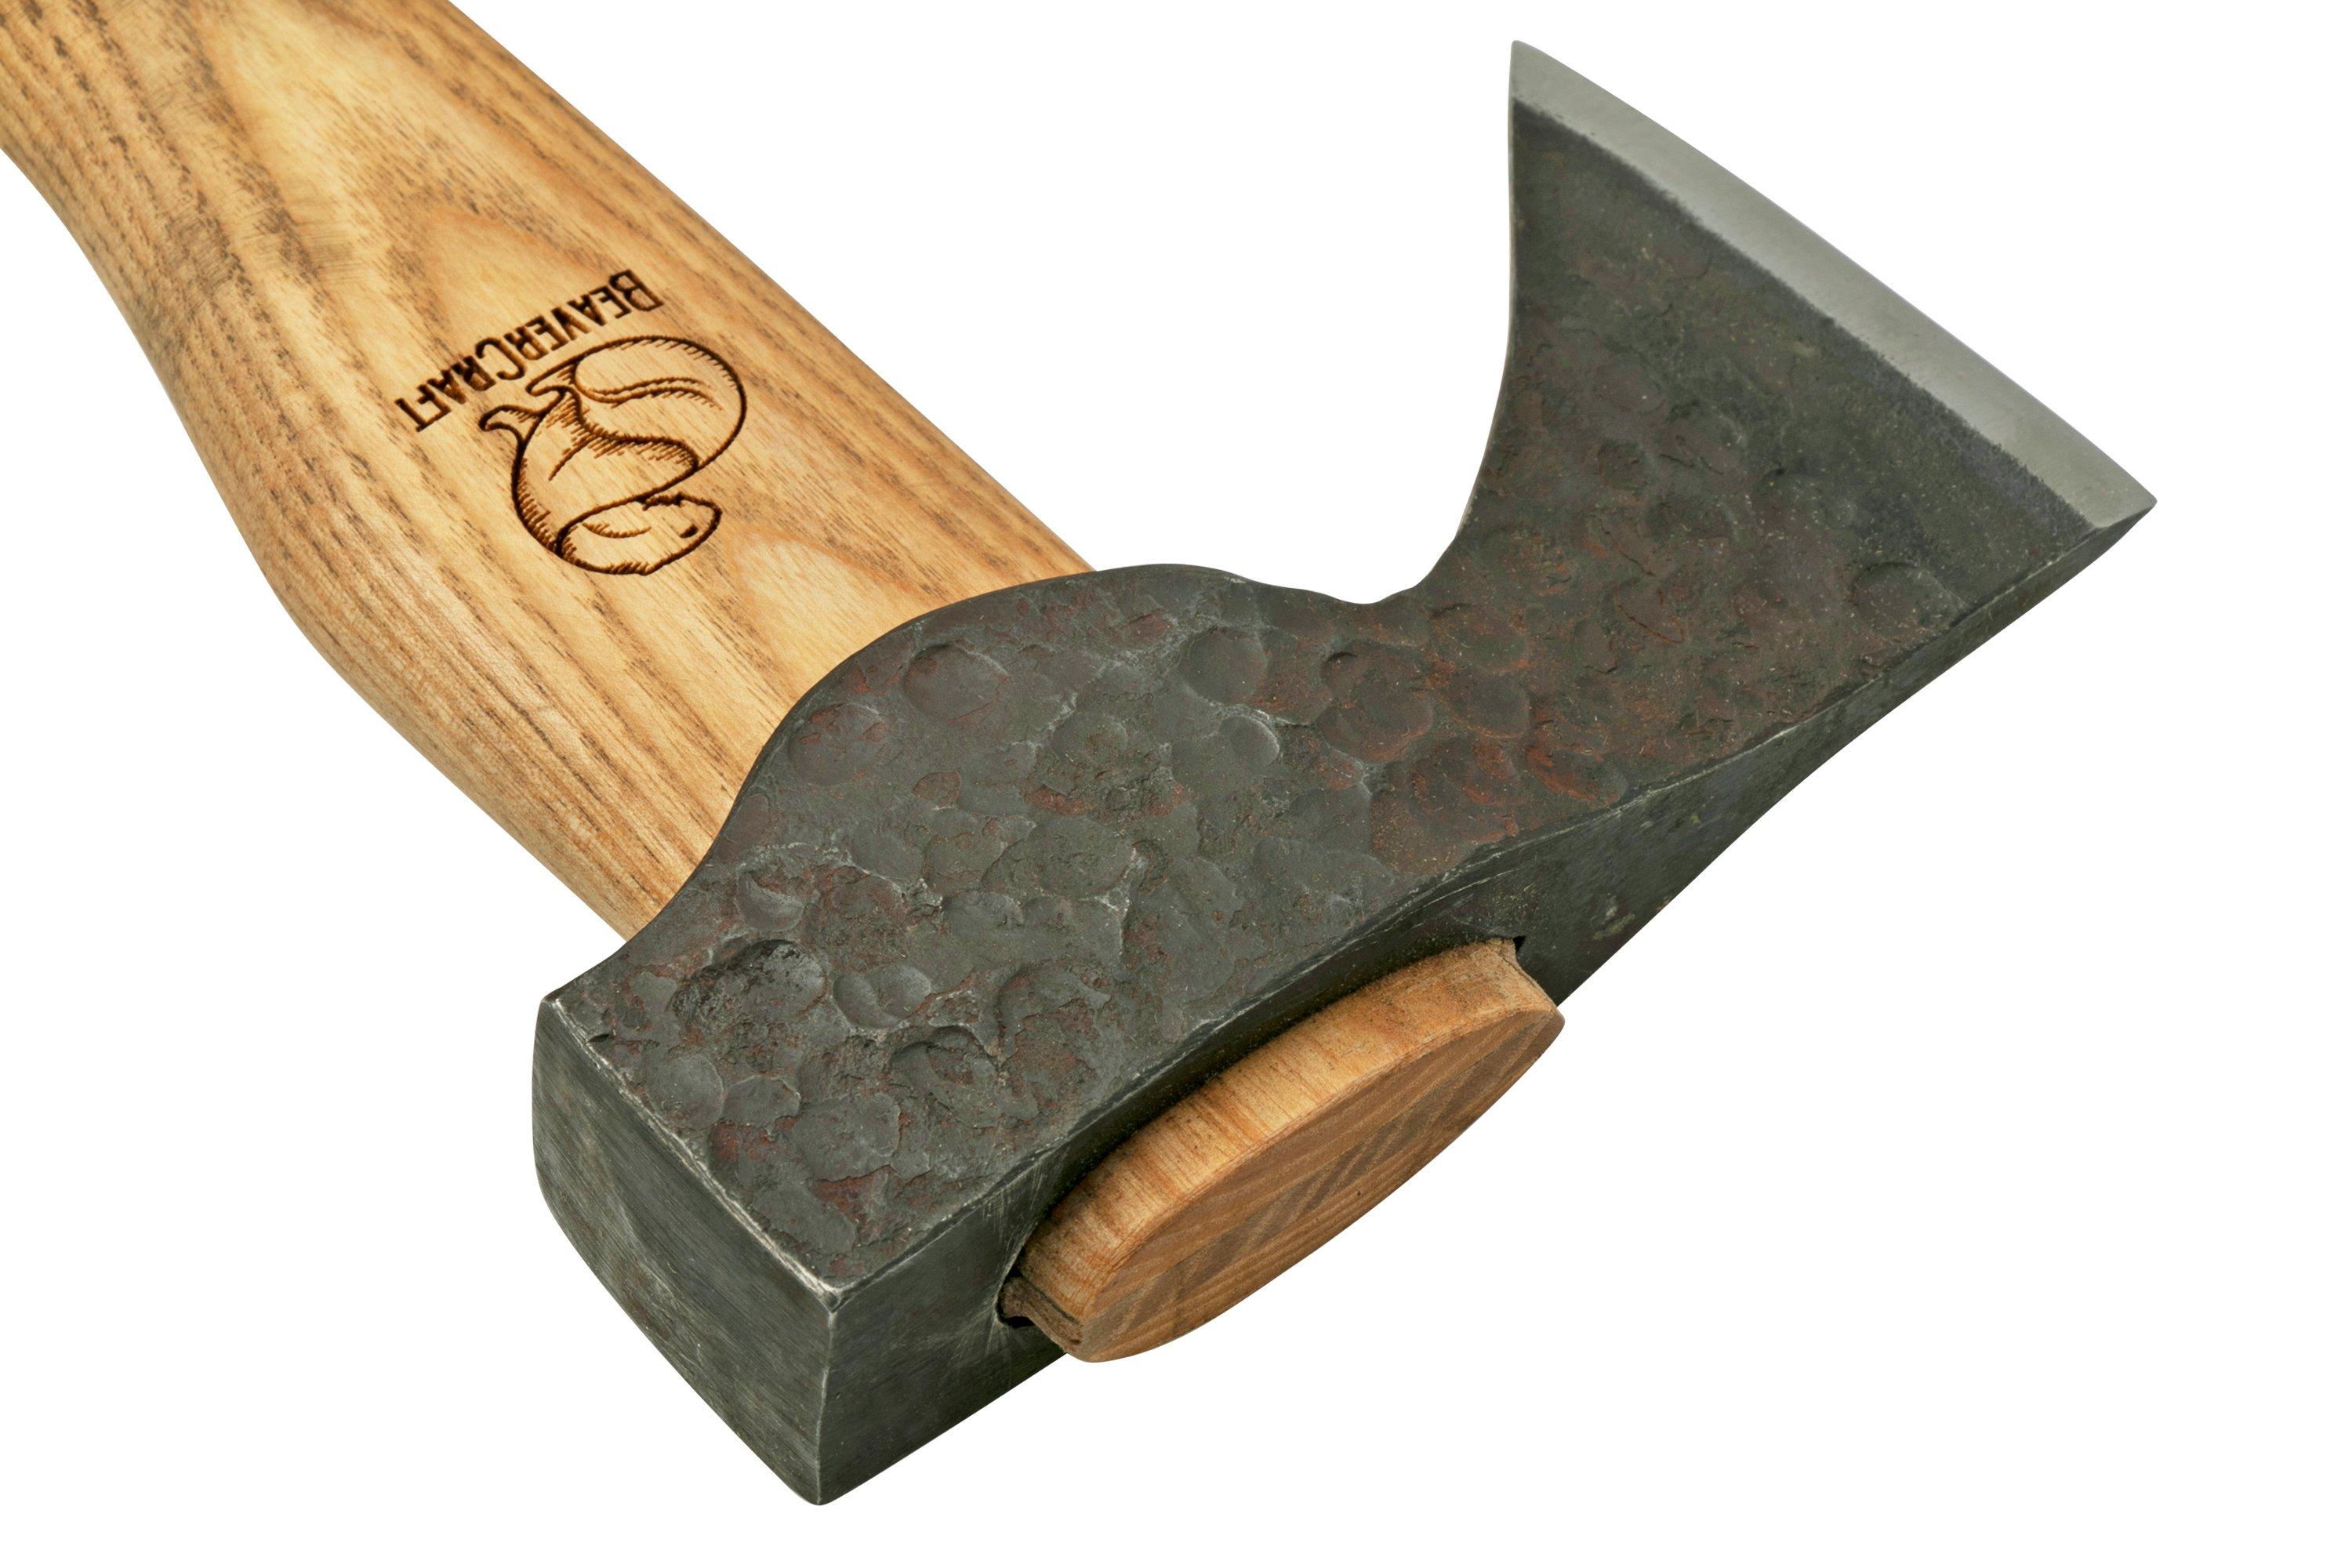 BeaverCraft AX1 Carving Axe, hand axe  Advantageously shopping at